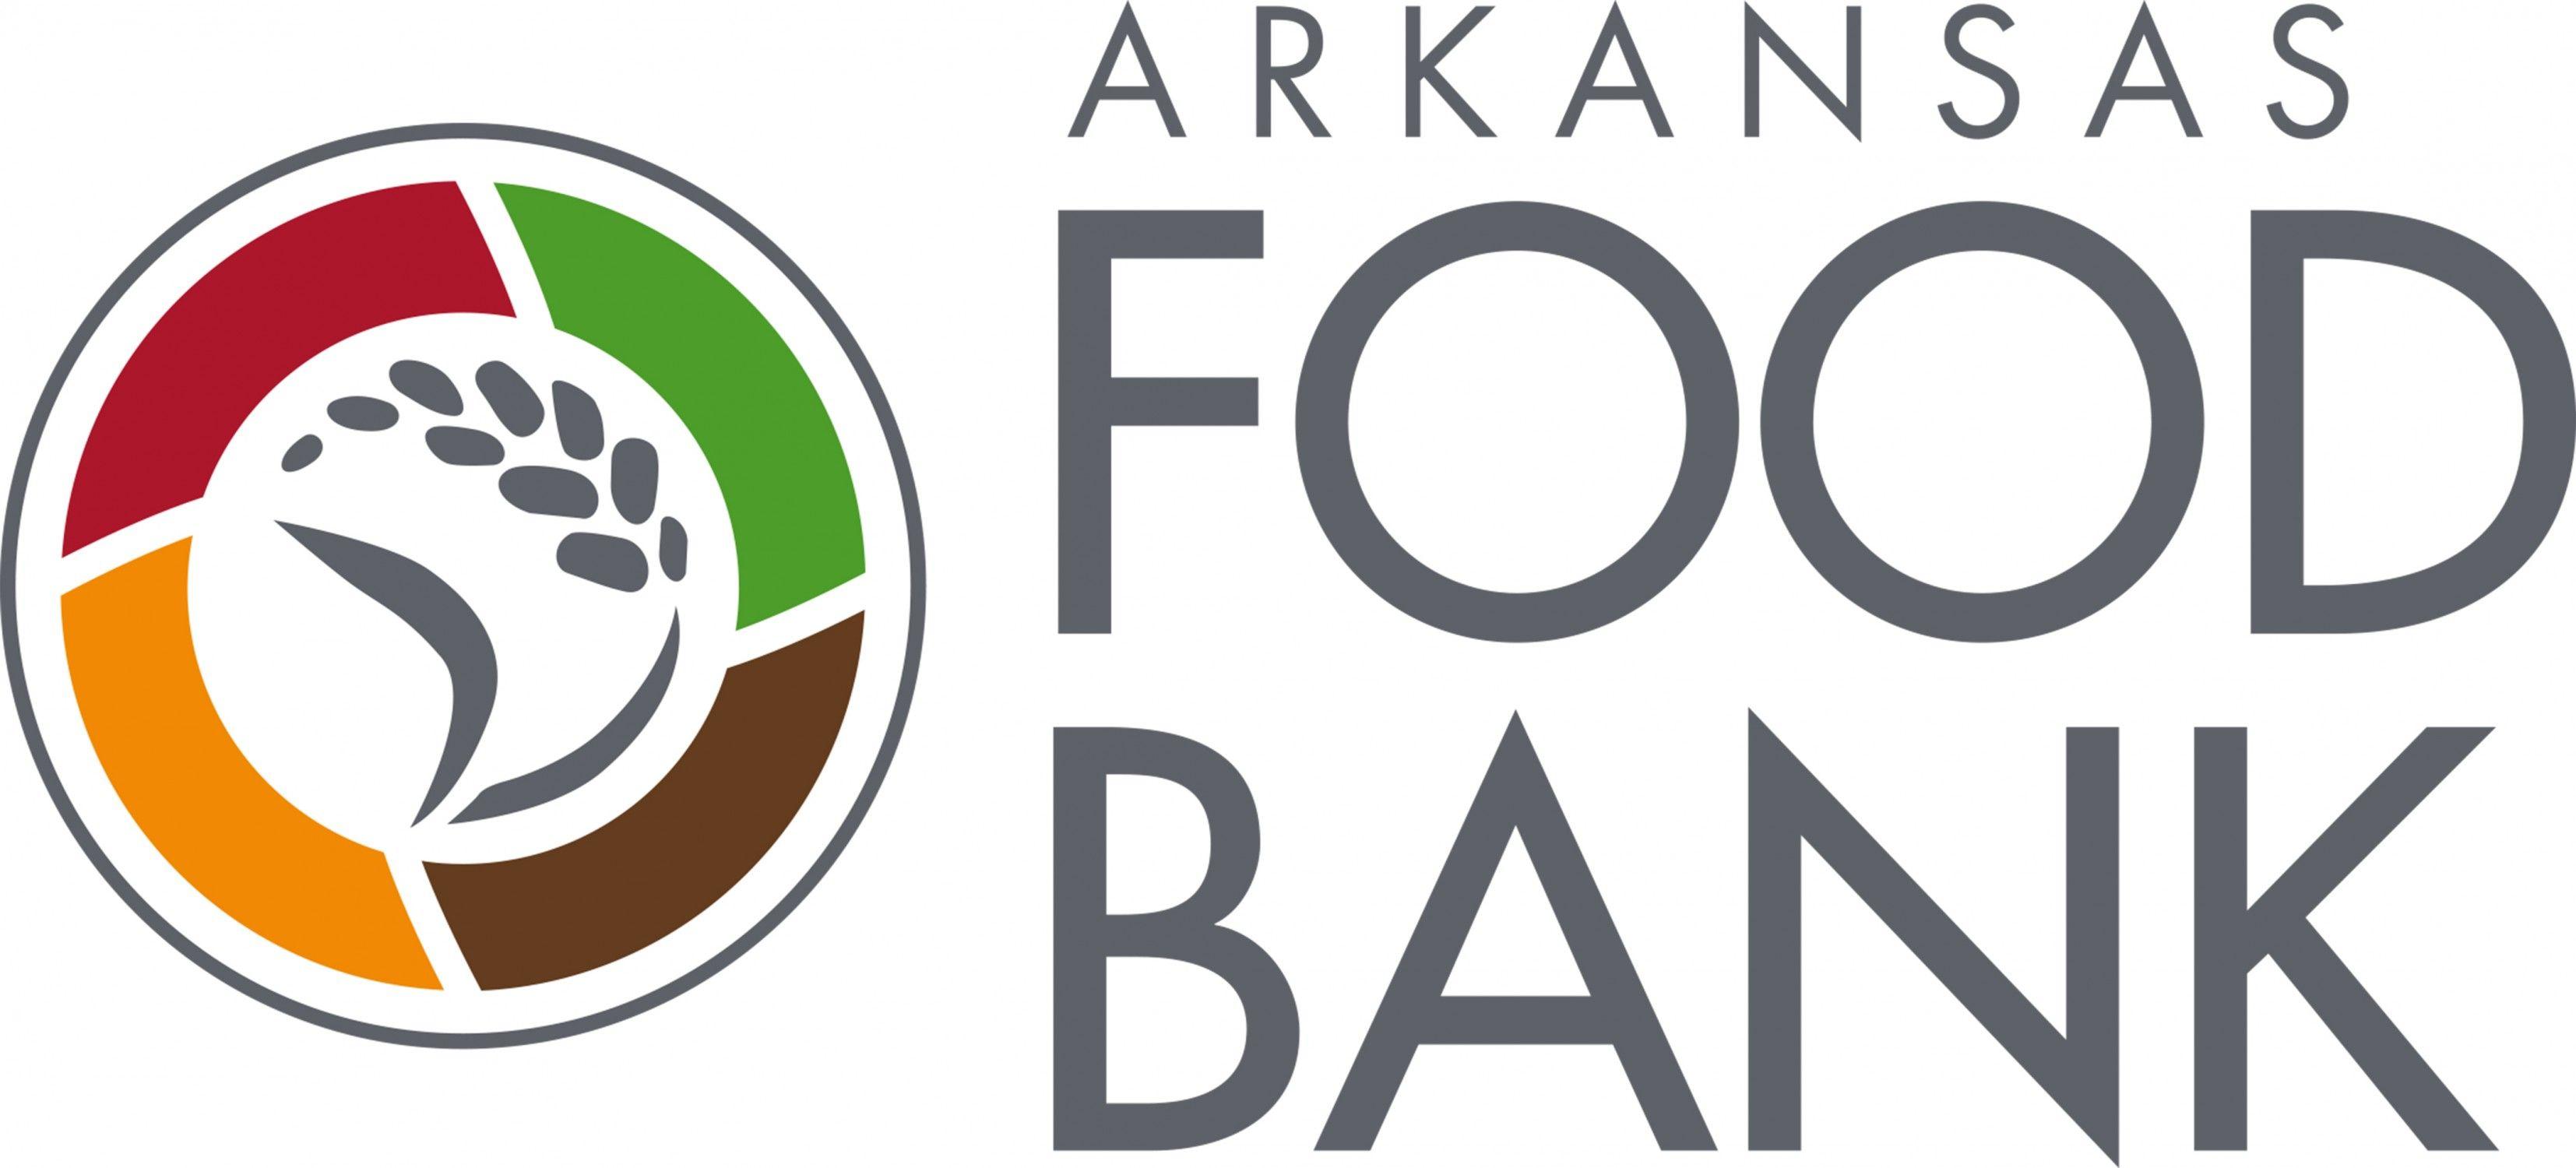 Arkansas Logo - Arkansas Foodbank largest hunger relief organization in the state